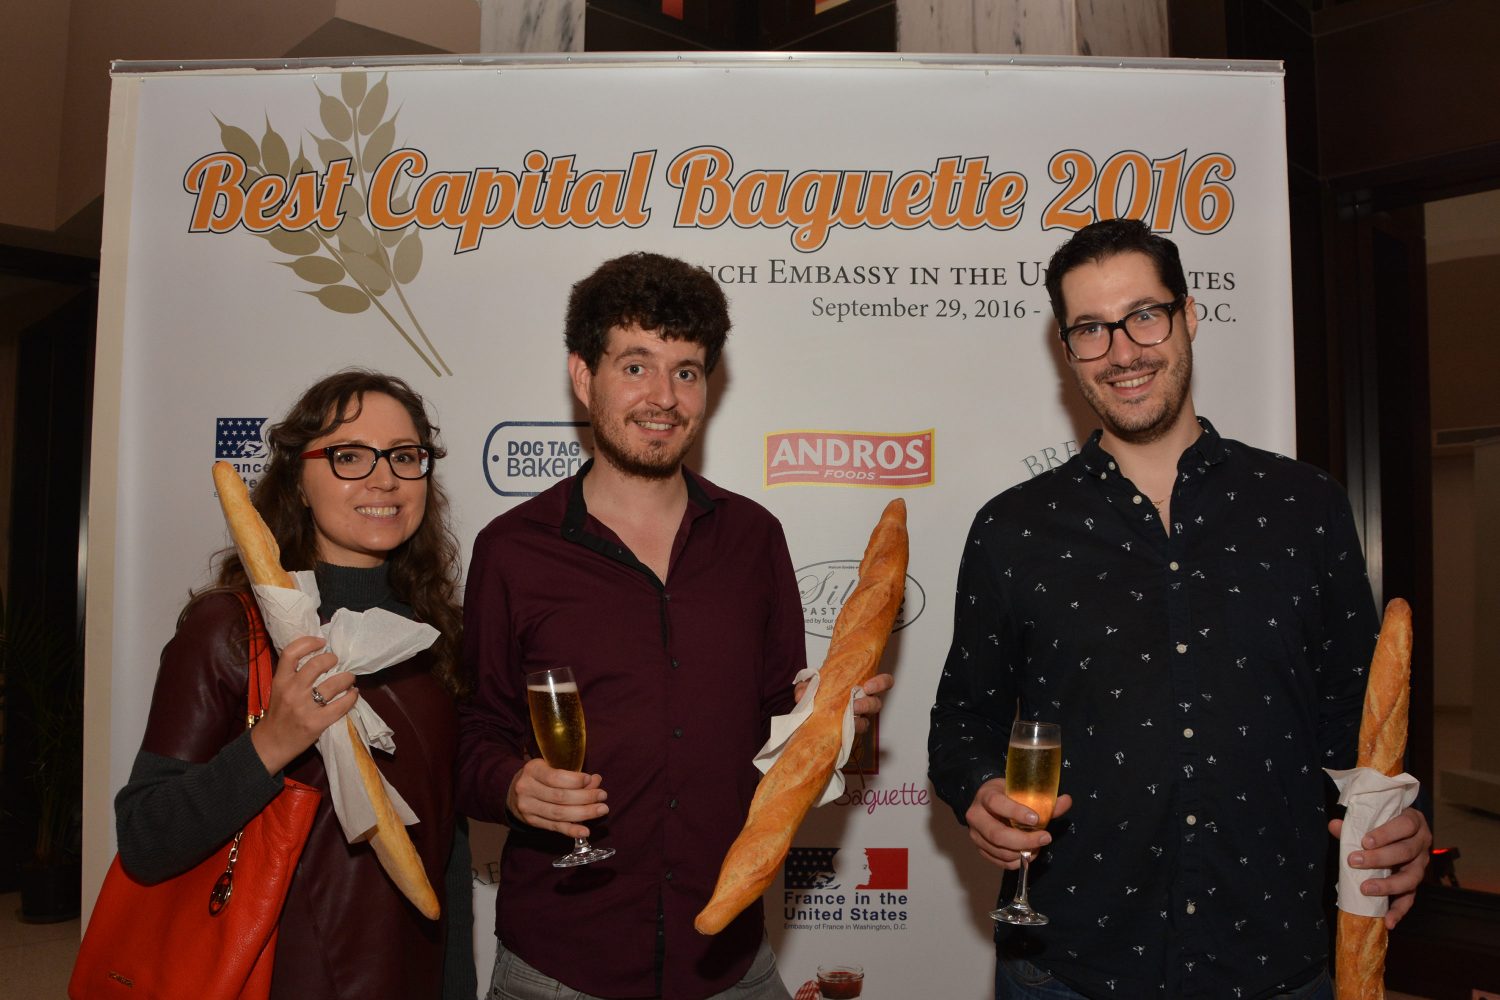 Best Capital Baguette Winner Announced